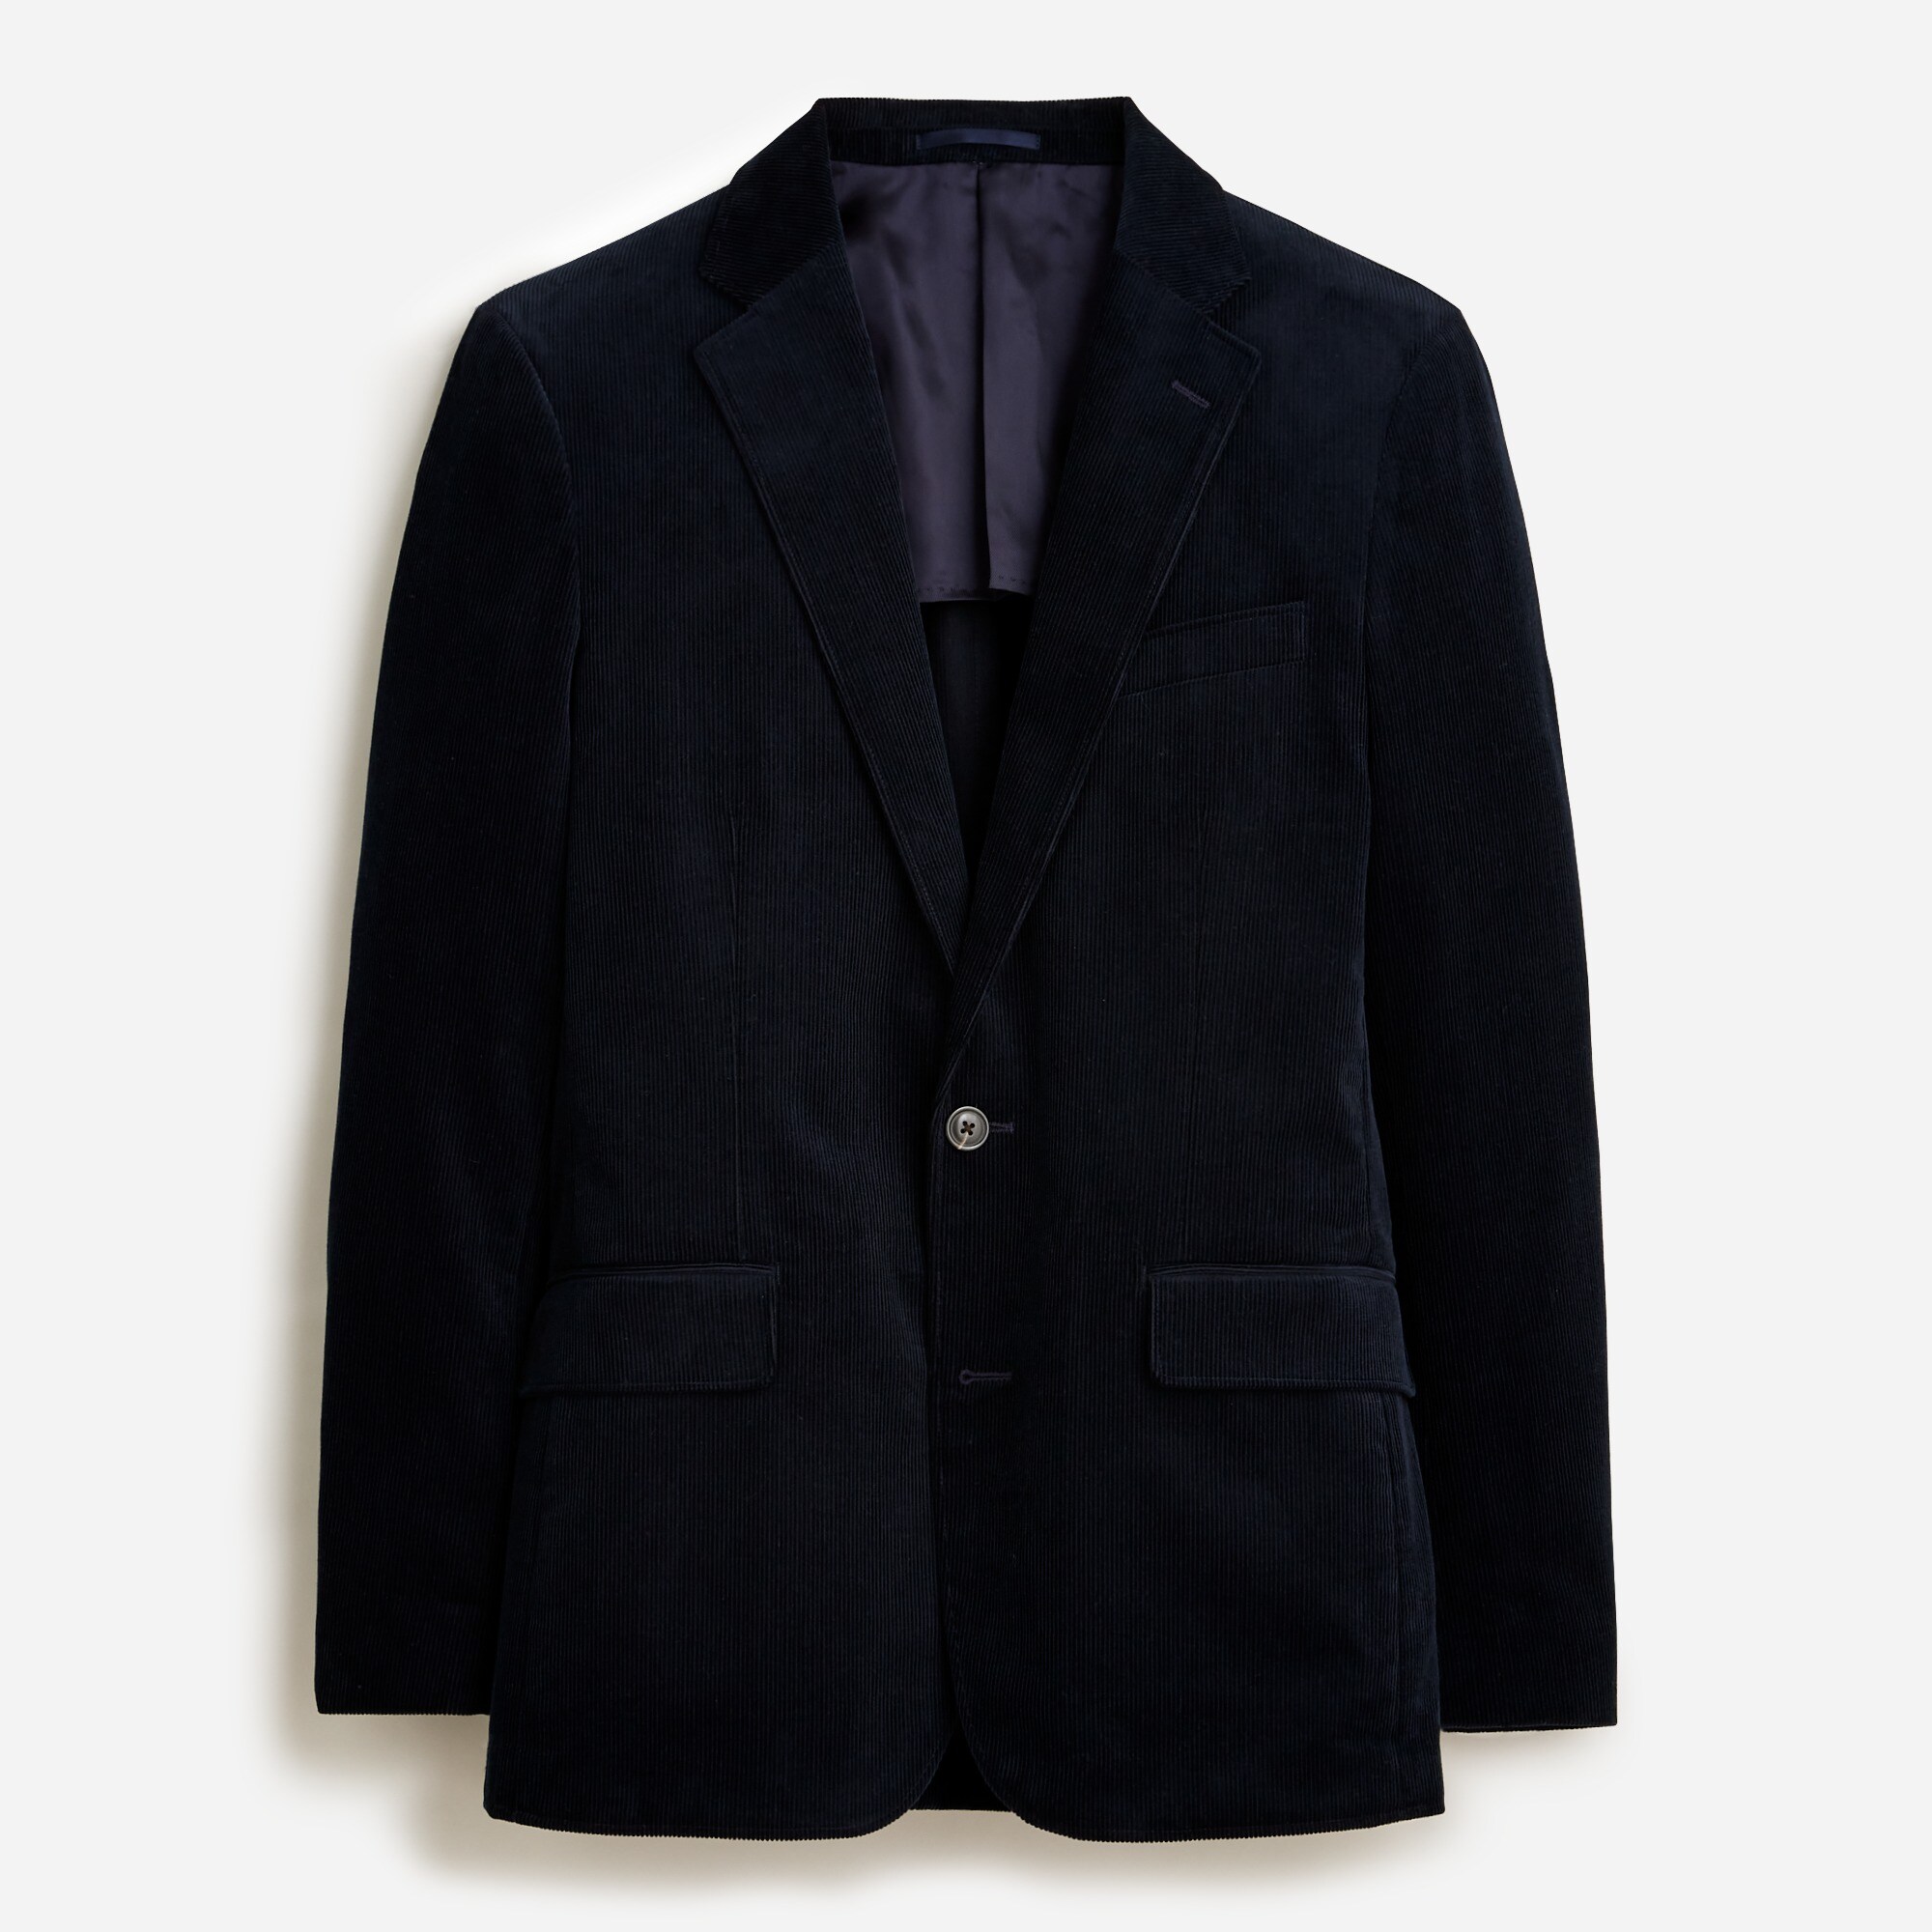  Ludlow Slim-fit suit jacket in Italian cotton corduroy